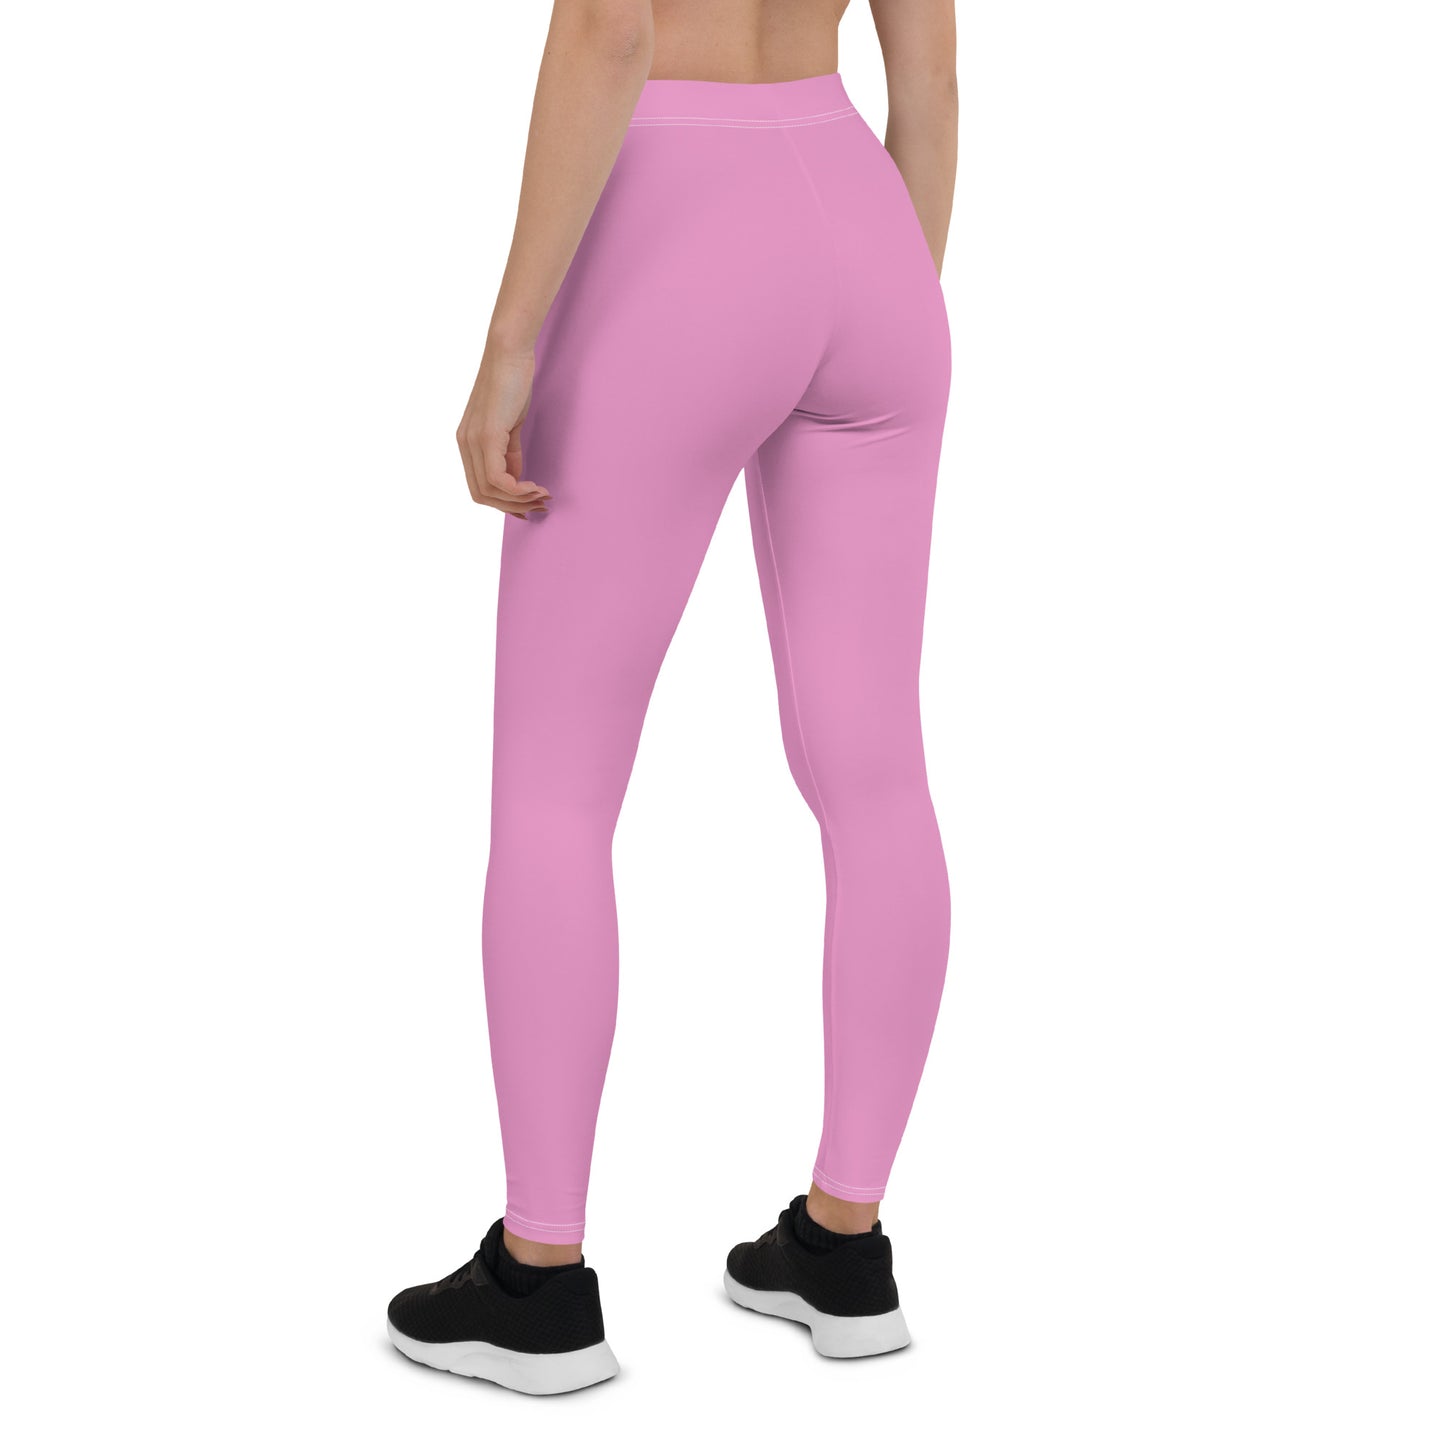 Humble Sportswear, women’s color match leggings, pink leggings for women, spandex leggings for workouts 